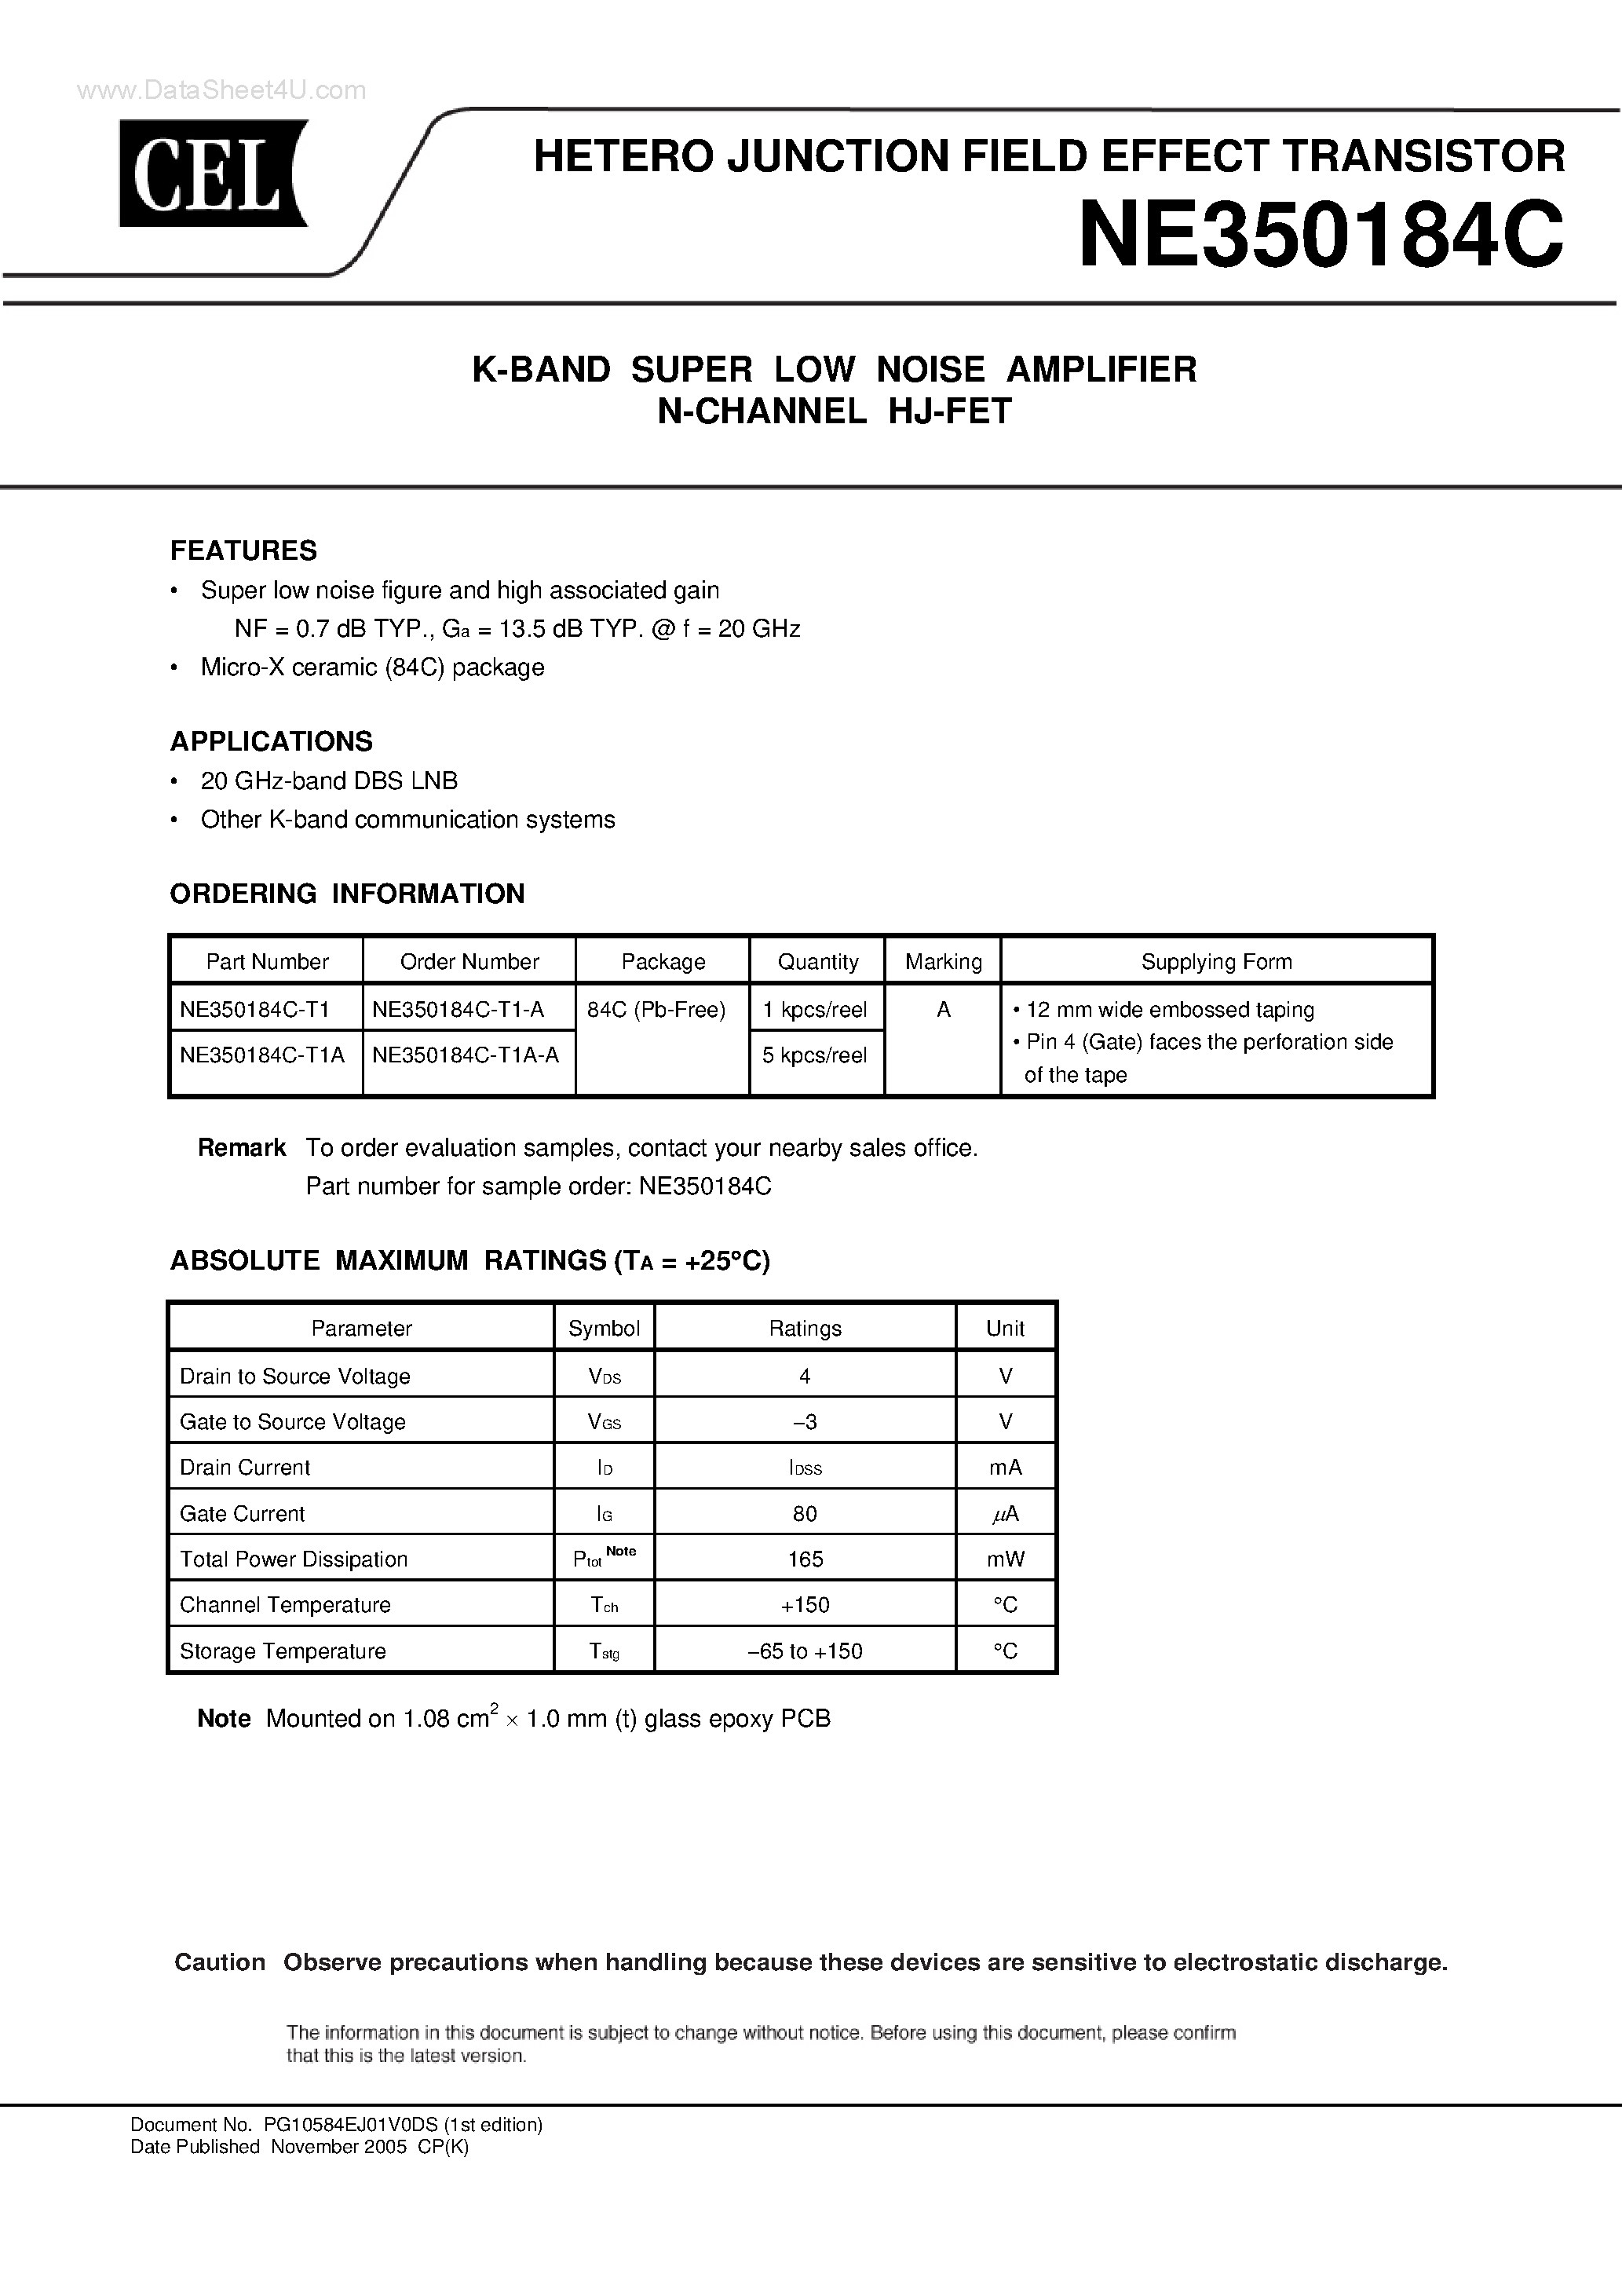 Даташит NE350184C - HETERO JUNCTION FIELD EFFECT TRANSISTOR K-BAND SUPER LOW NOISE AMPLIFIER N-CHANNEL HJ-FET страница 1